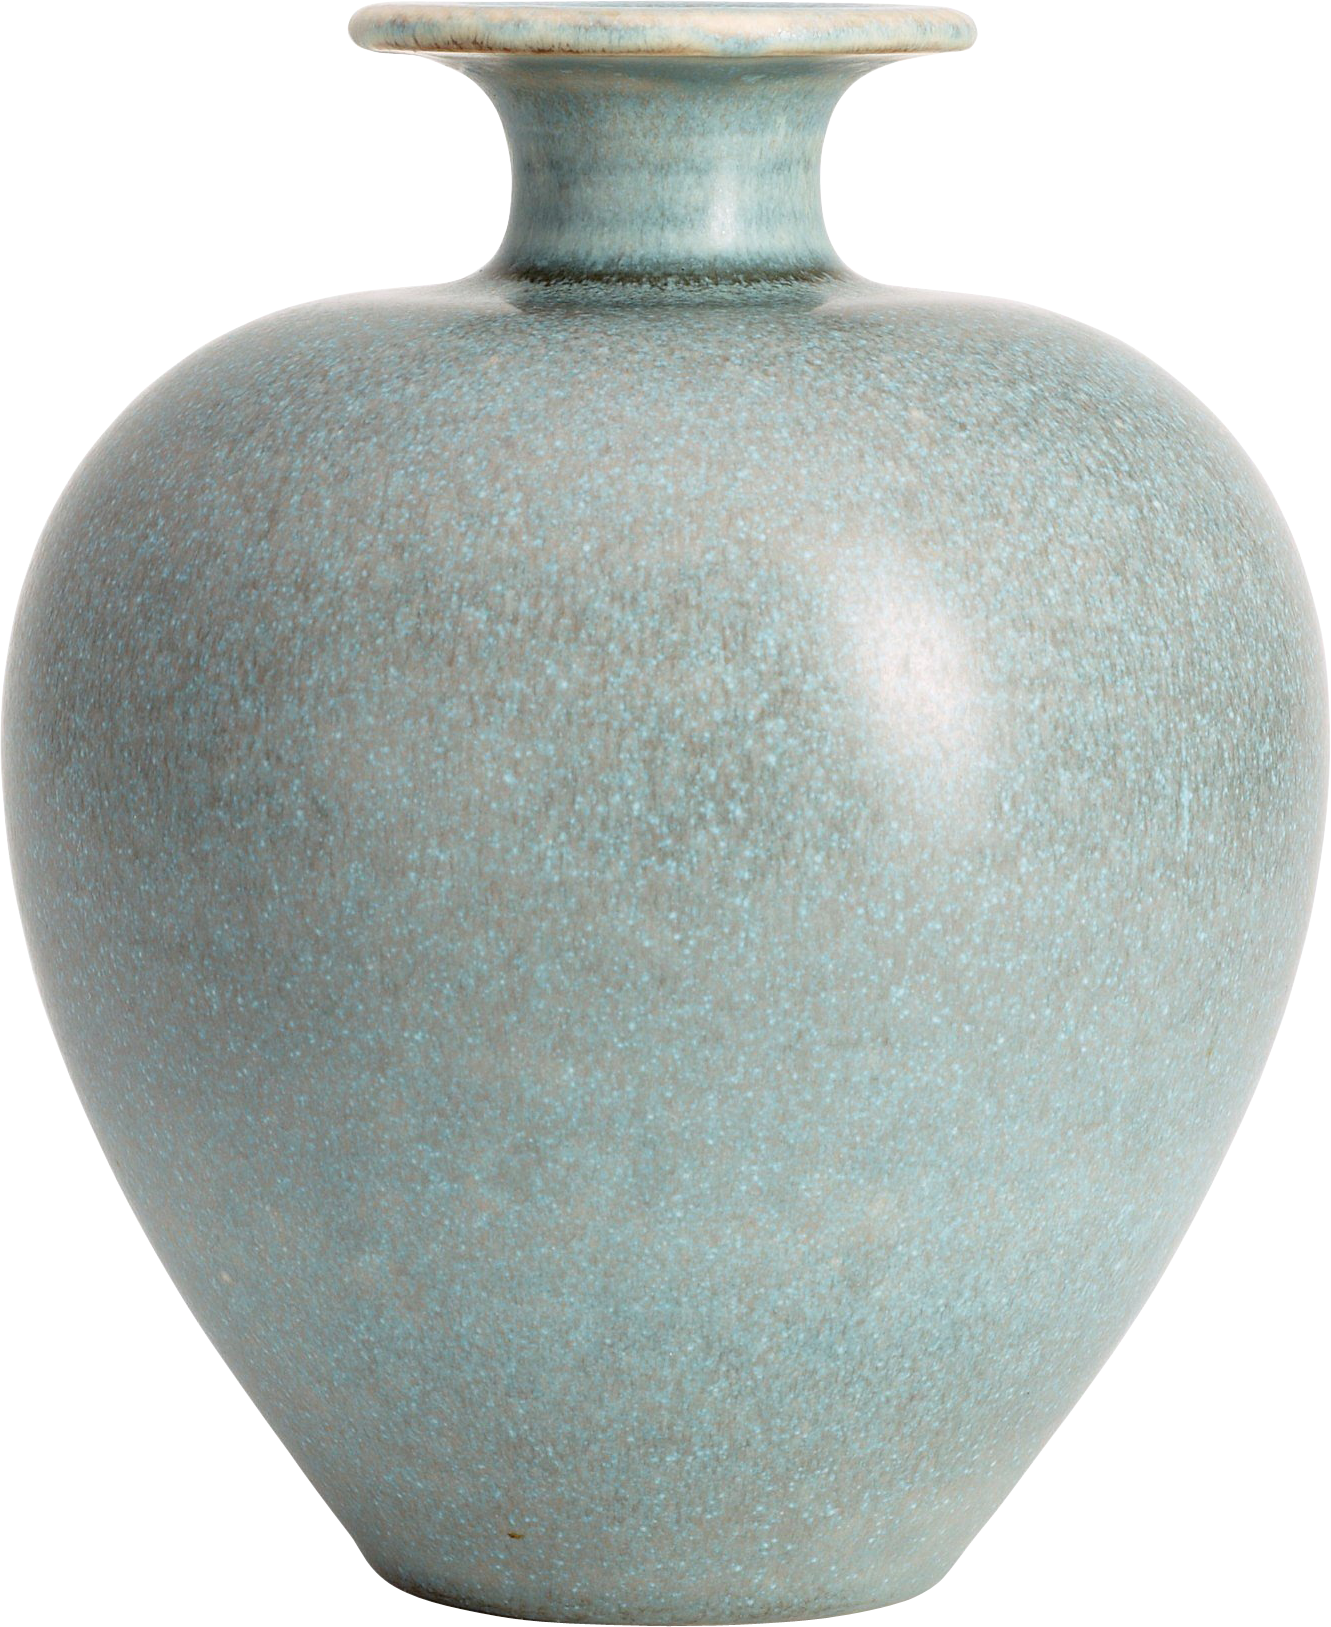 vase clipart grecian urn